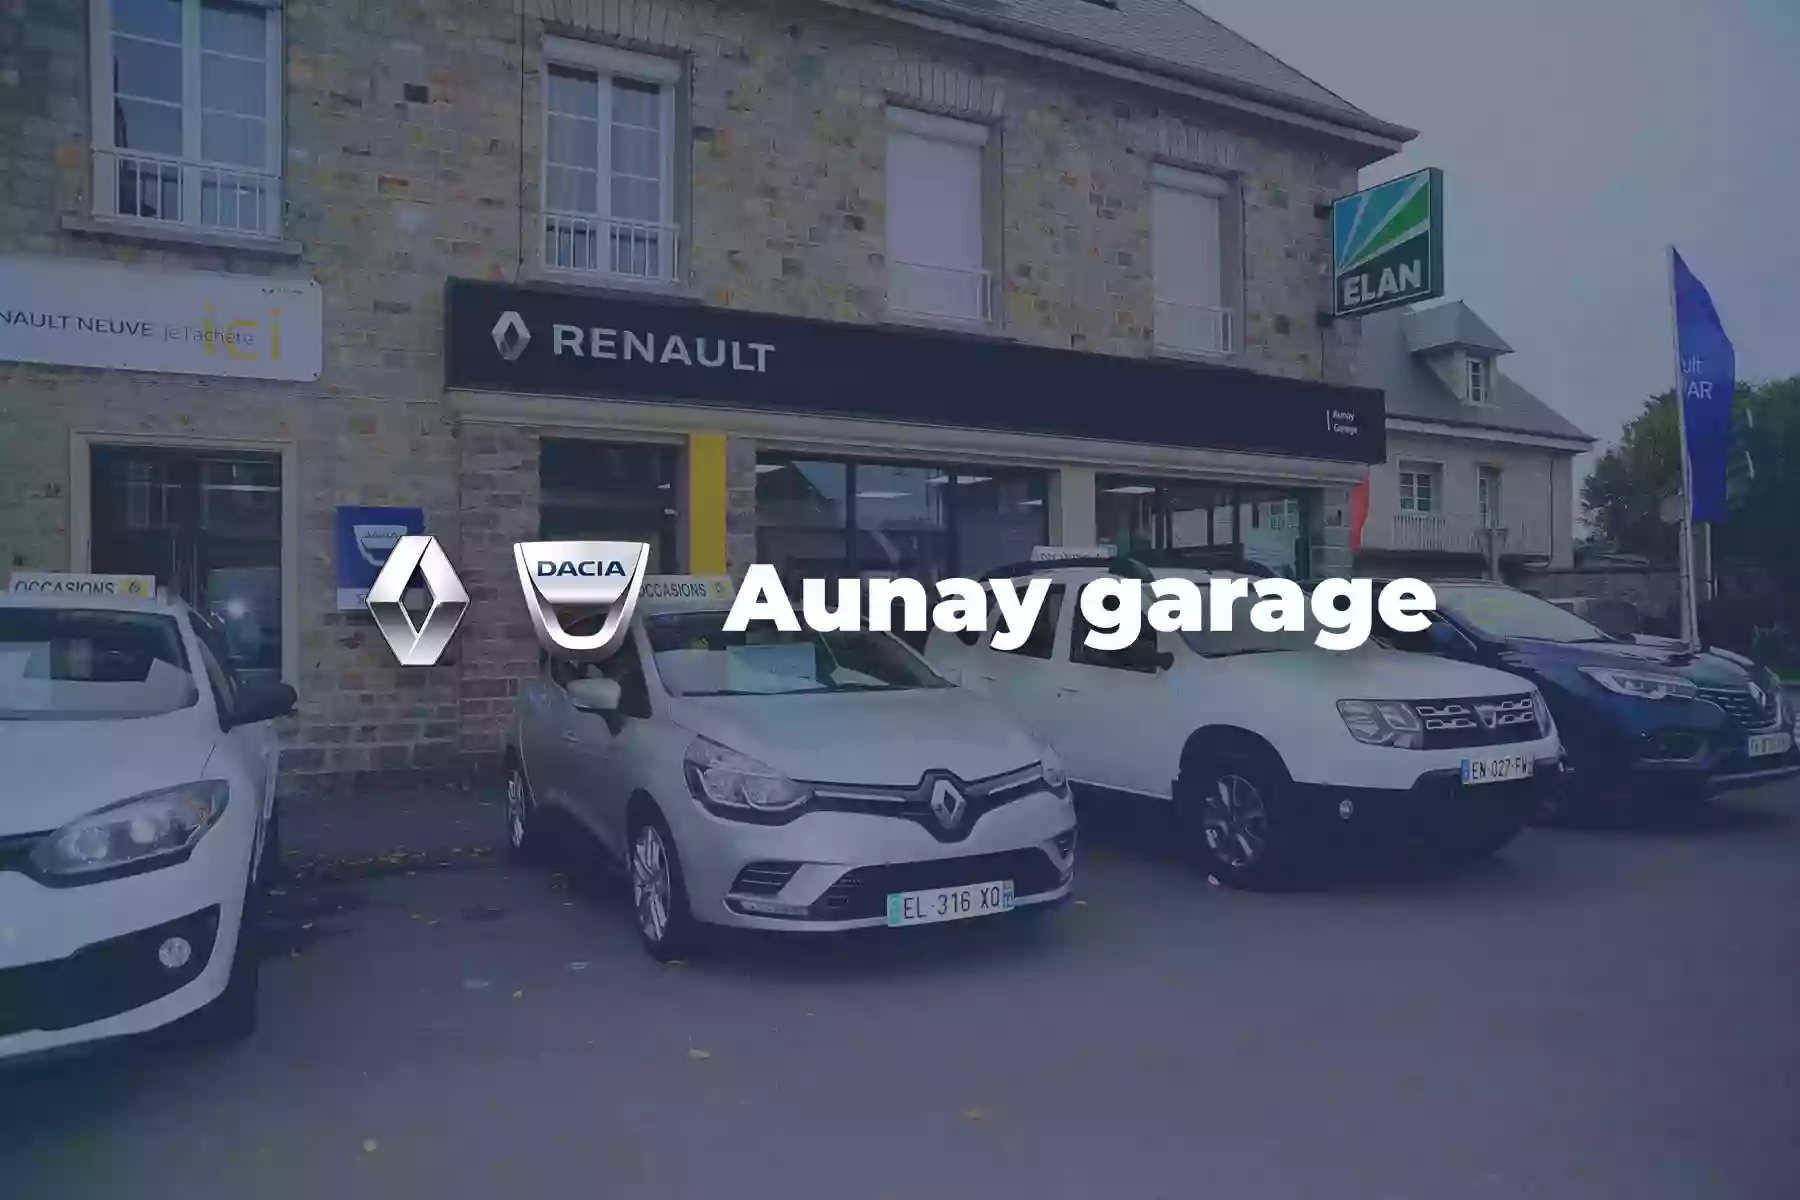 Aunay garage Renault